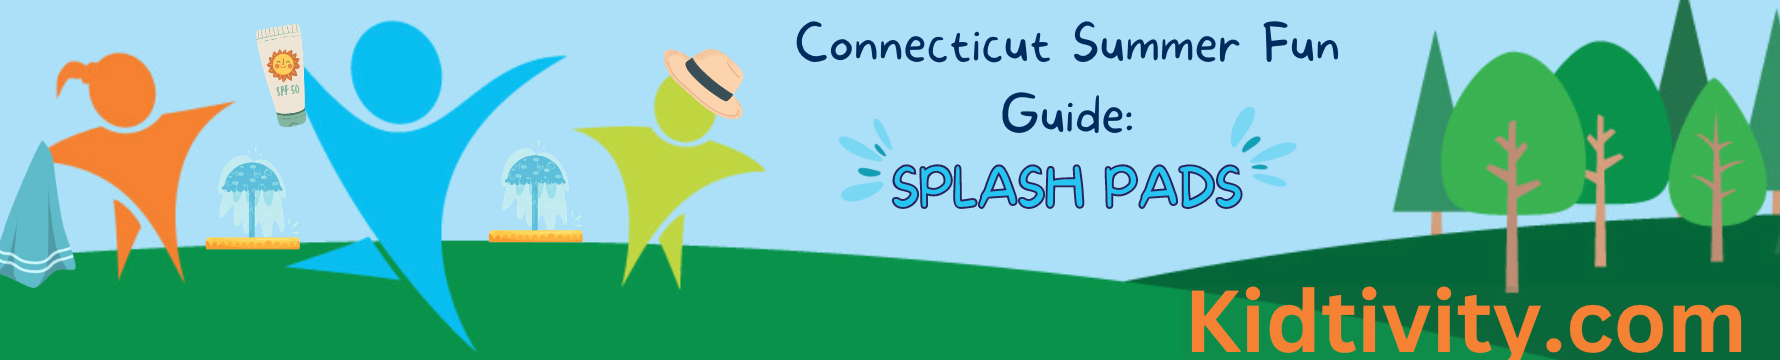 Splash Pad Guide